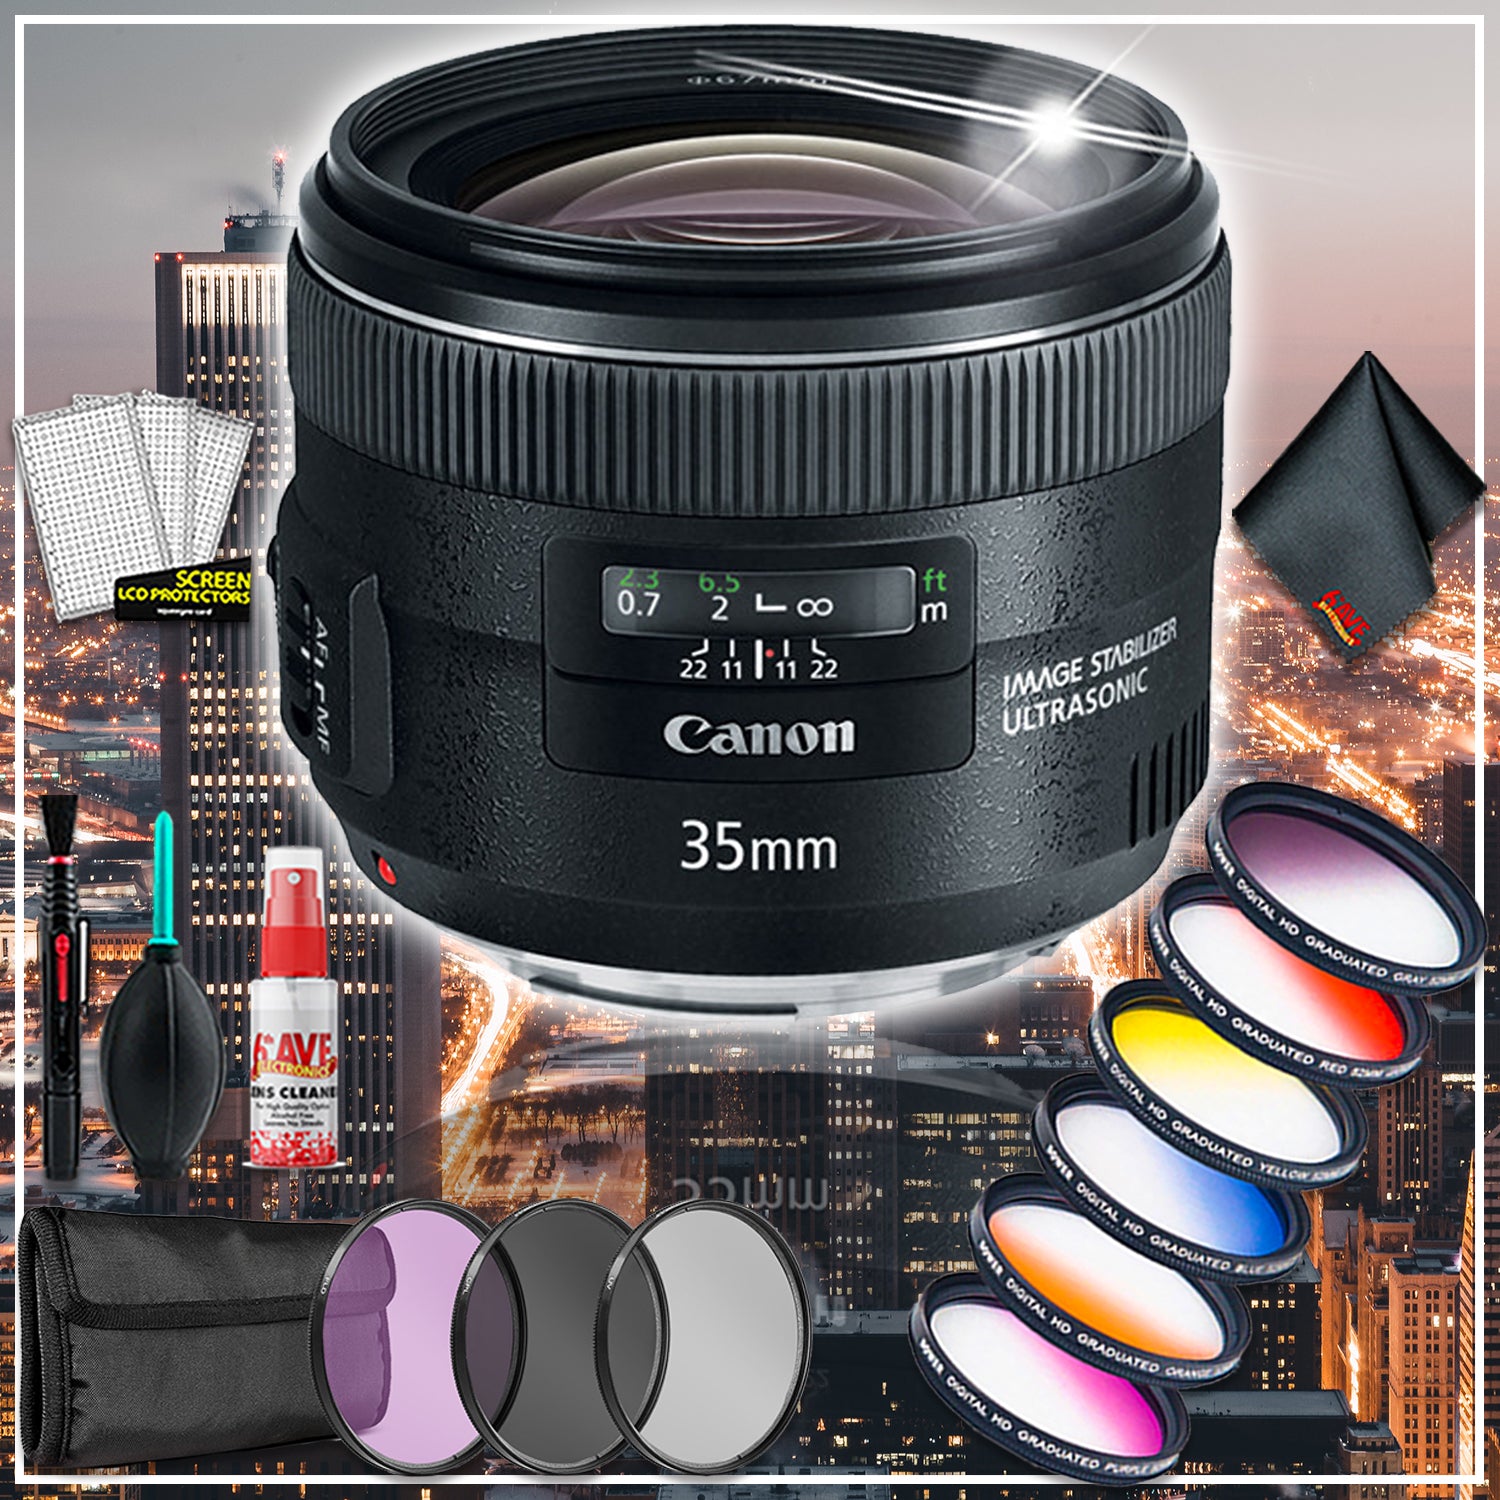 Canon EF 35mm f/2 IS USM Lens (Intl Model) w/ Premium Lens Filter Kit and Cleaning Kit